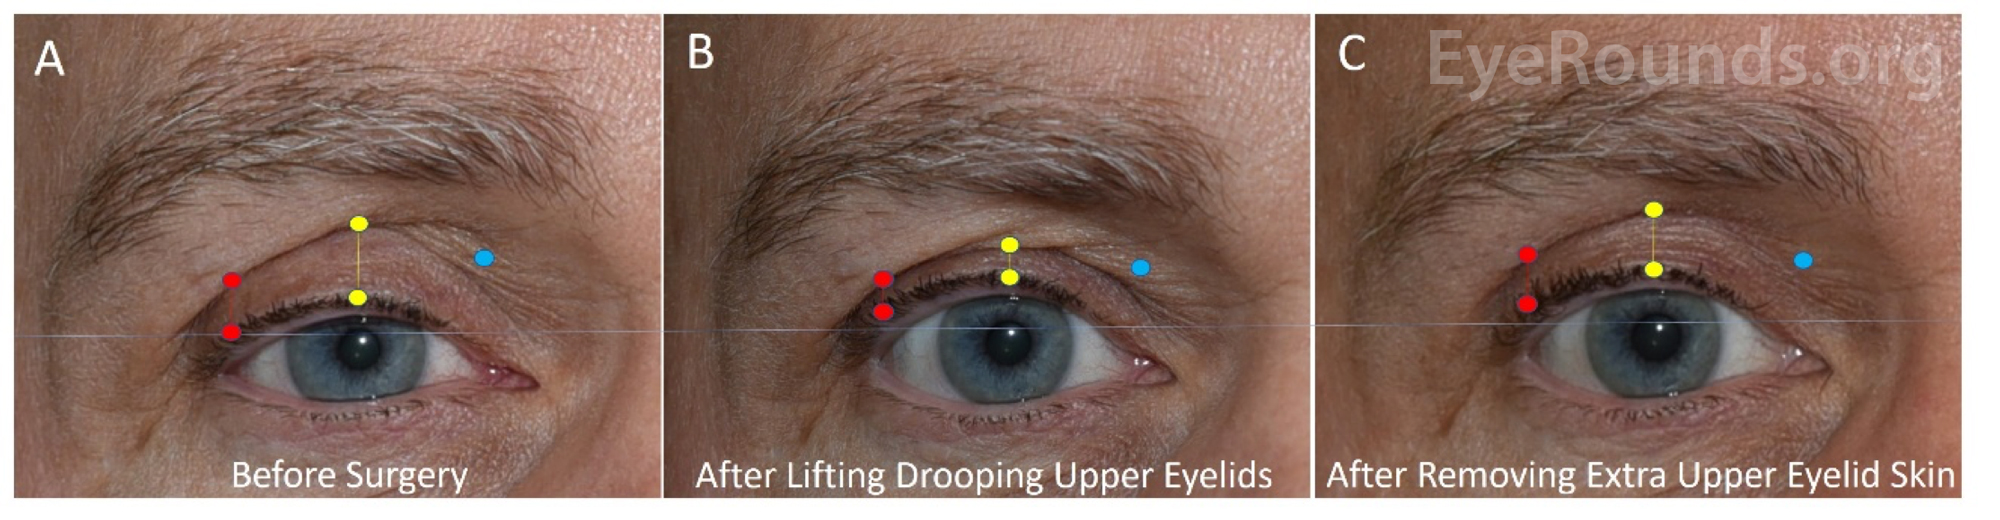 pre-surgery, post eyelid lift, and post upper eyelid blepharoplasty